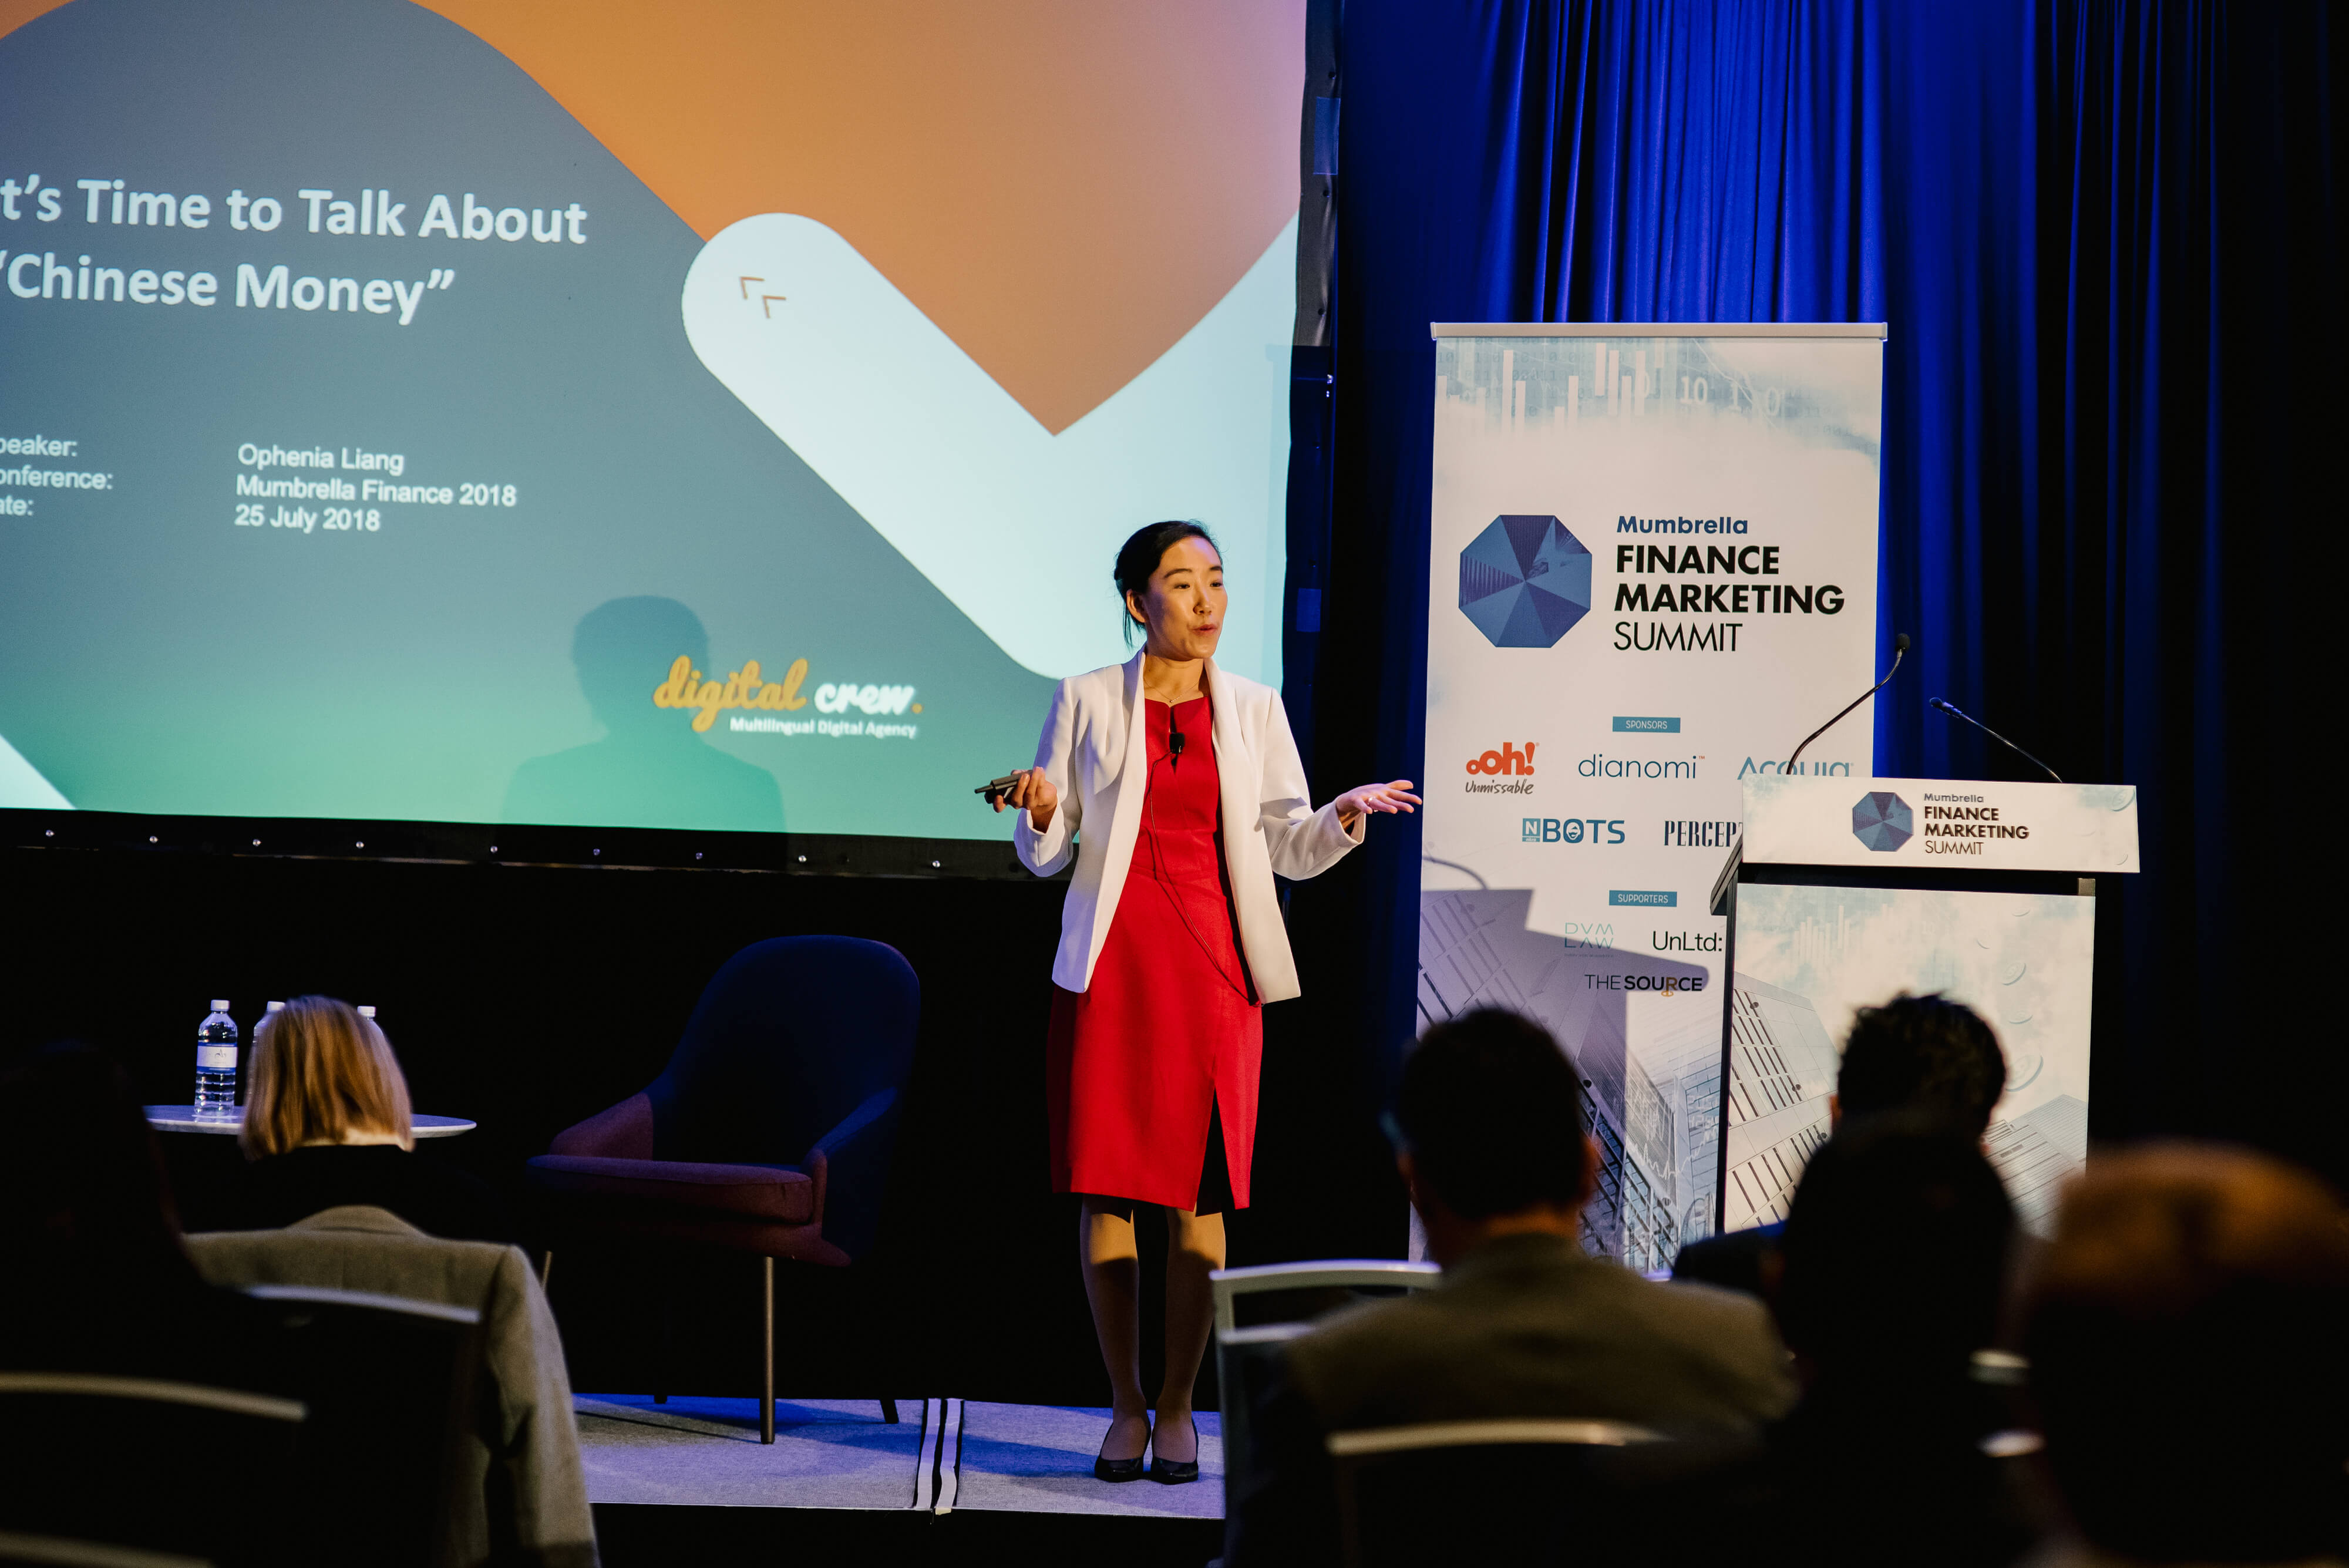 Ophenia Liang from digital crew invited to speak at Mumbrella summit 2018